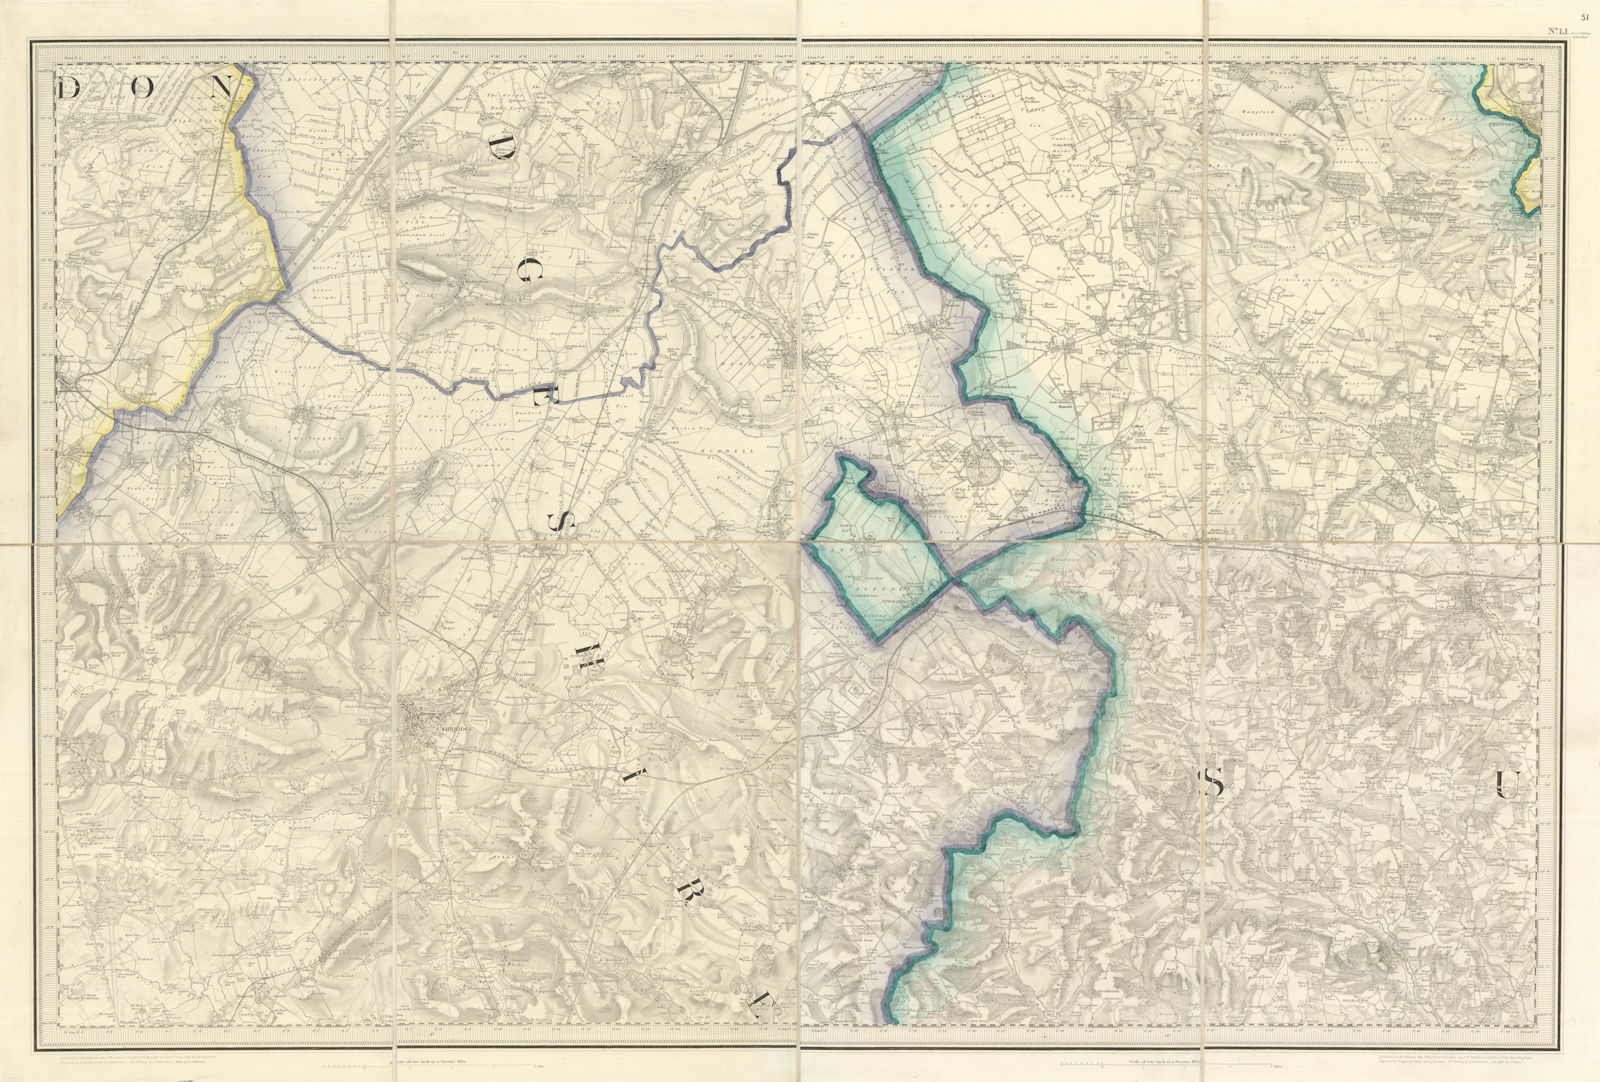 OS #51 Cambridgeshire Fens & The Brecks. Ely Bury St. Edmunds Suffolk 1836 map